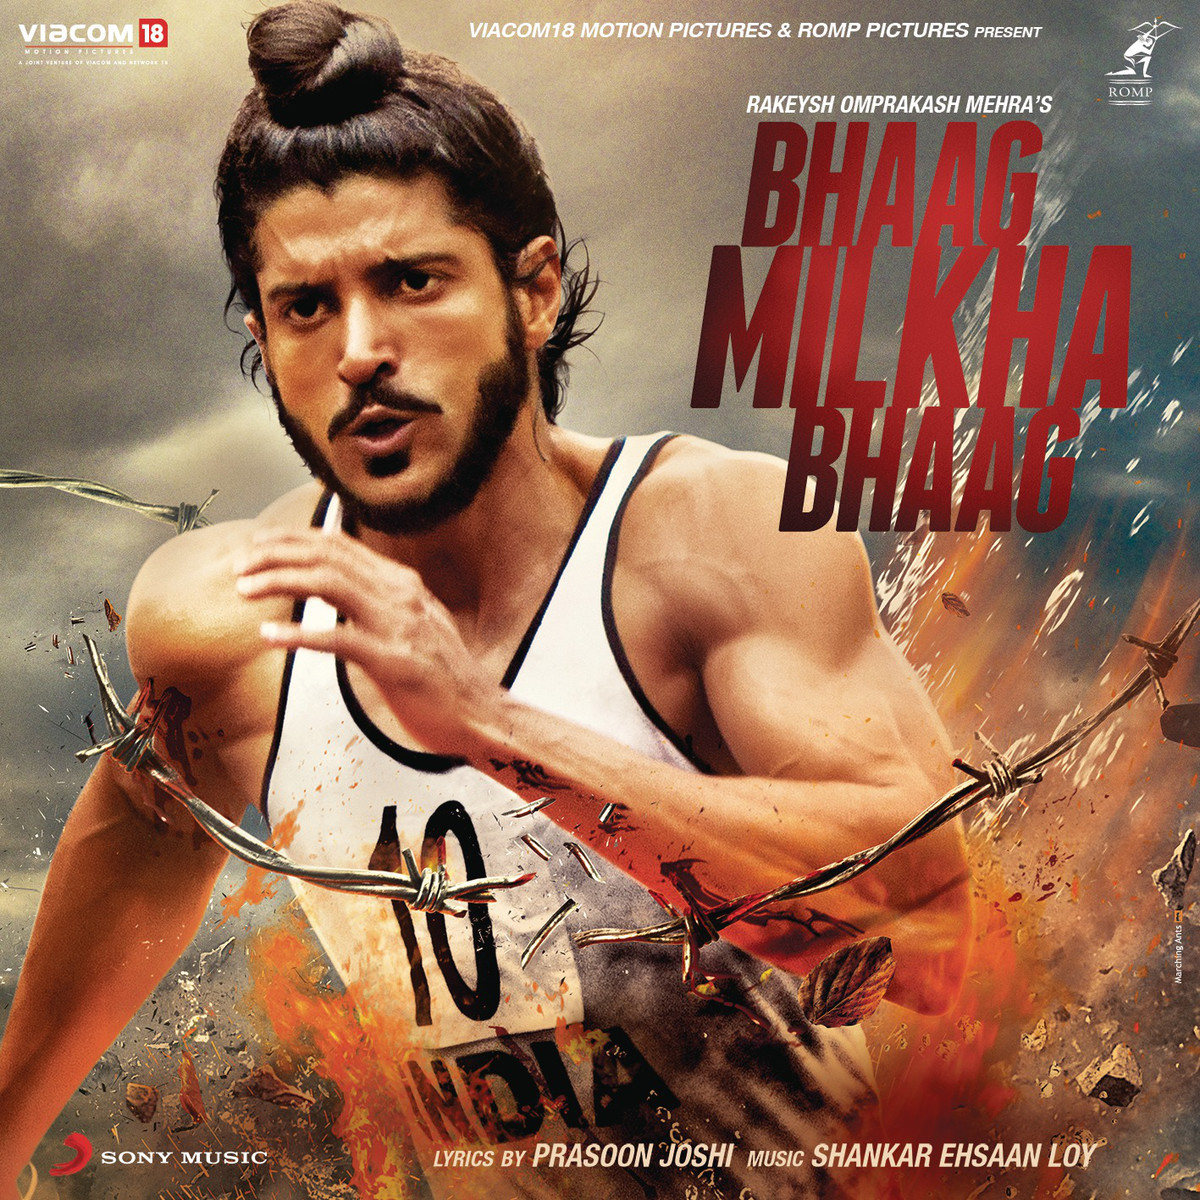 bhaag milkha bhaag full movie hd 1080p in hindi